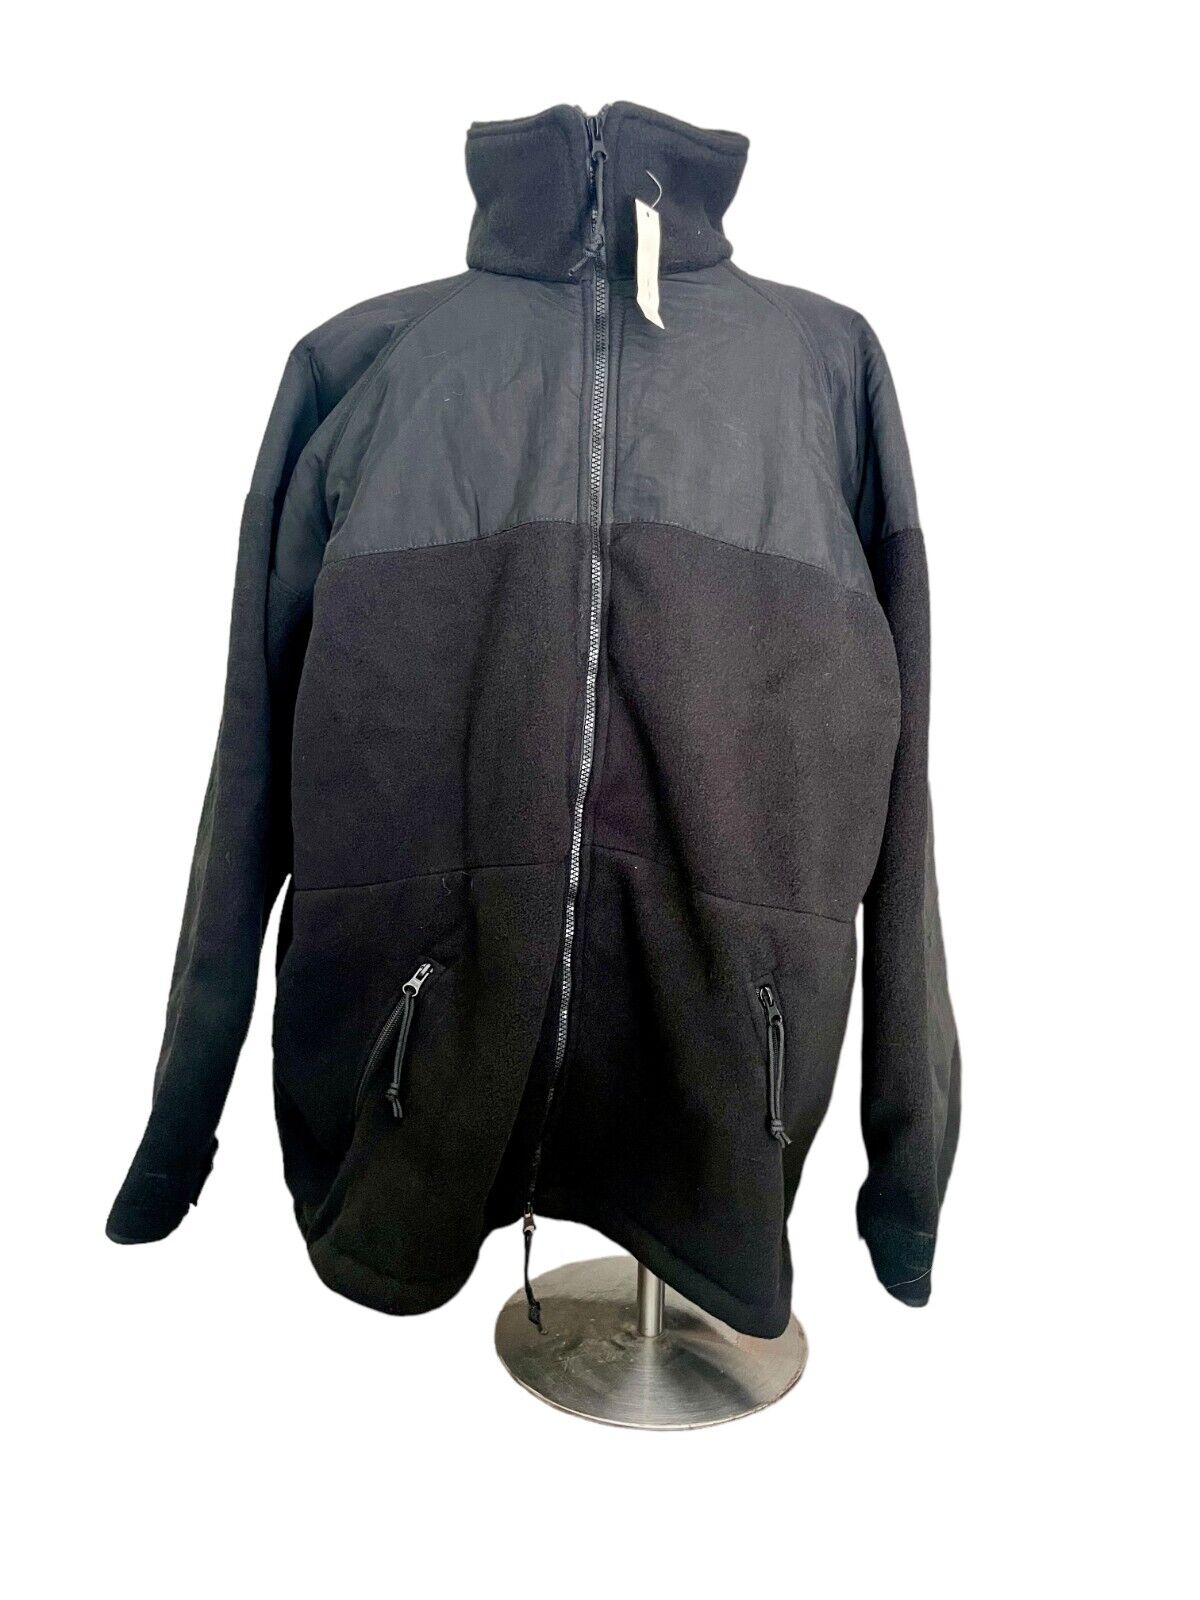 DSCP by Peckham US Military  Black Polartec  Fleece Cold Weather Jacket XL NWT